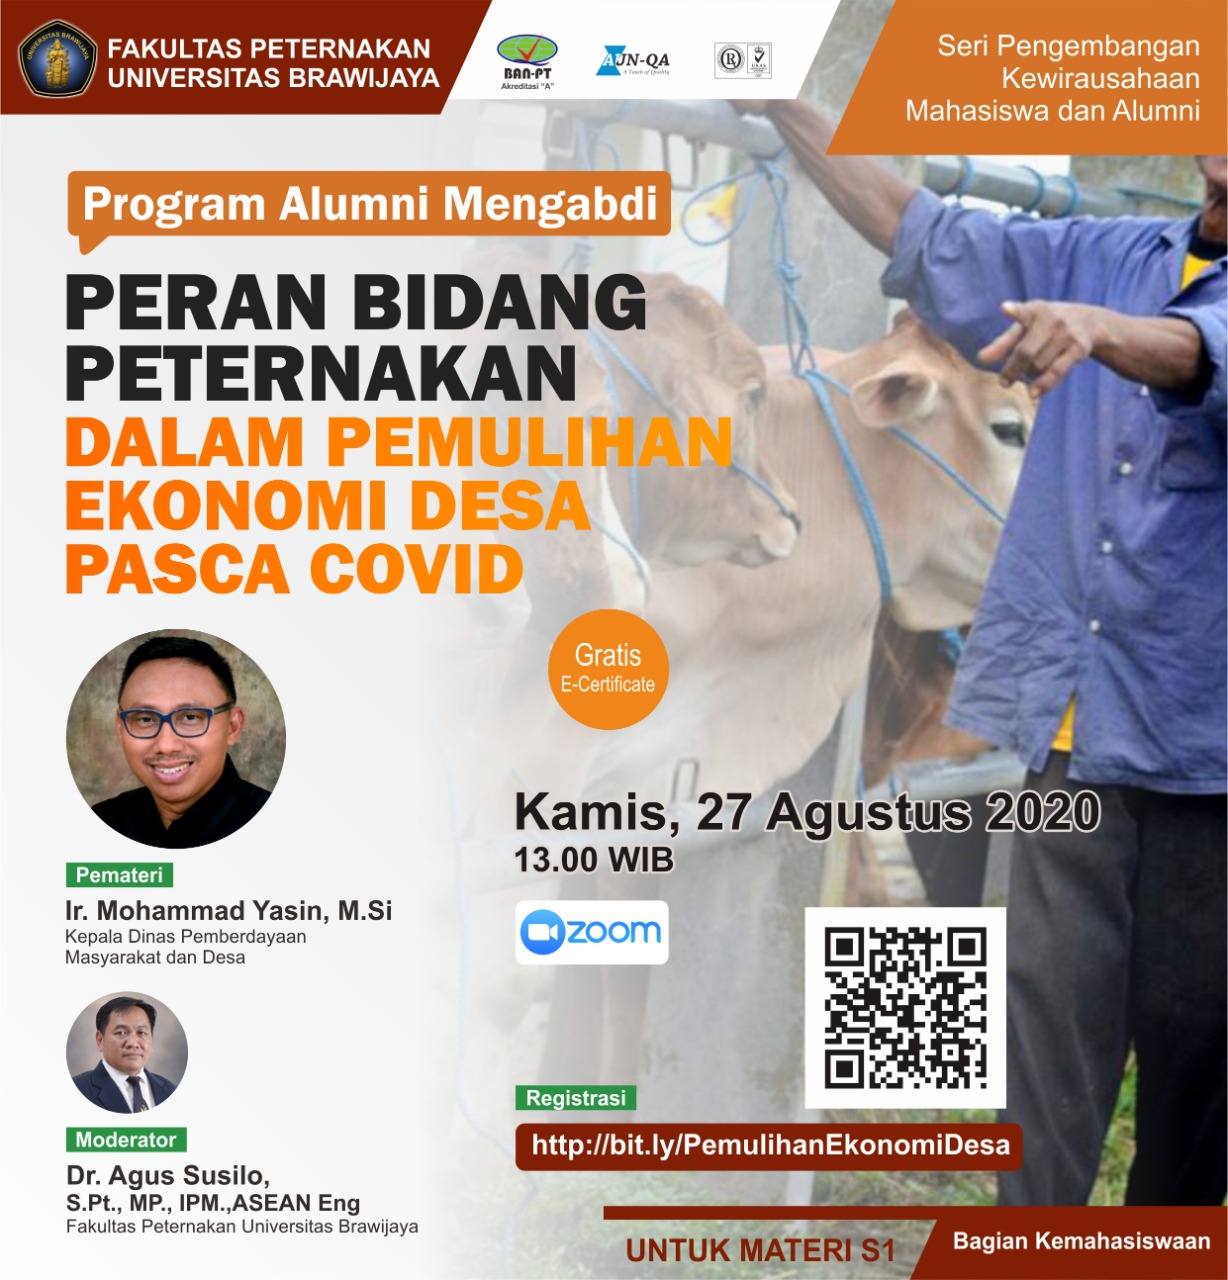 Seminar Online Peran Bidang Peternakan dalam Pemulihan Ekonomi Desa Pasca Covid